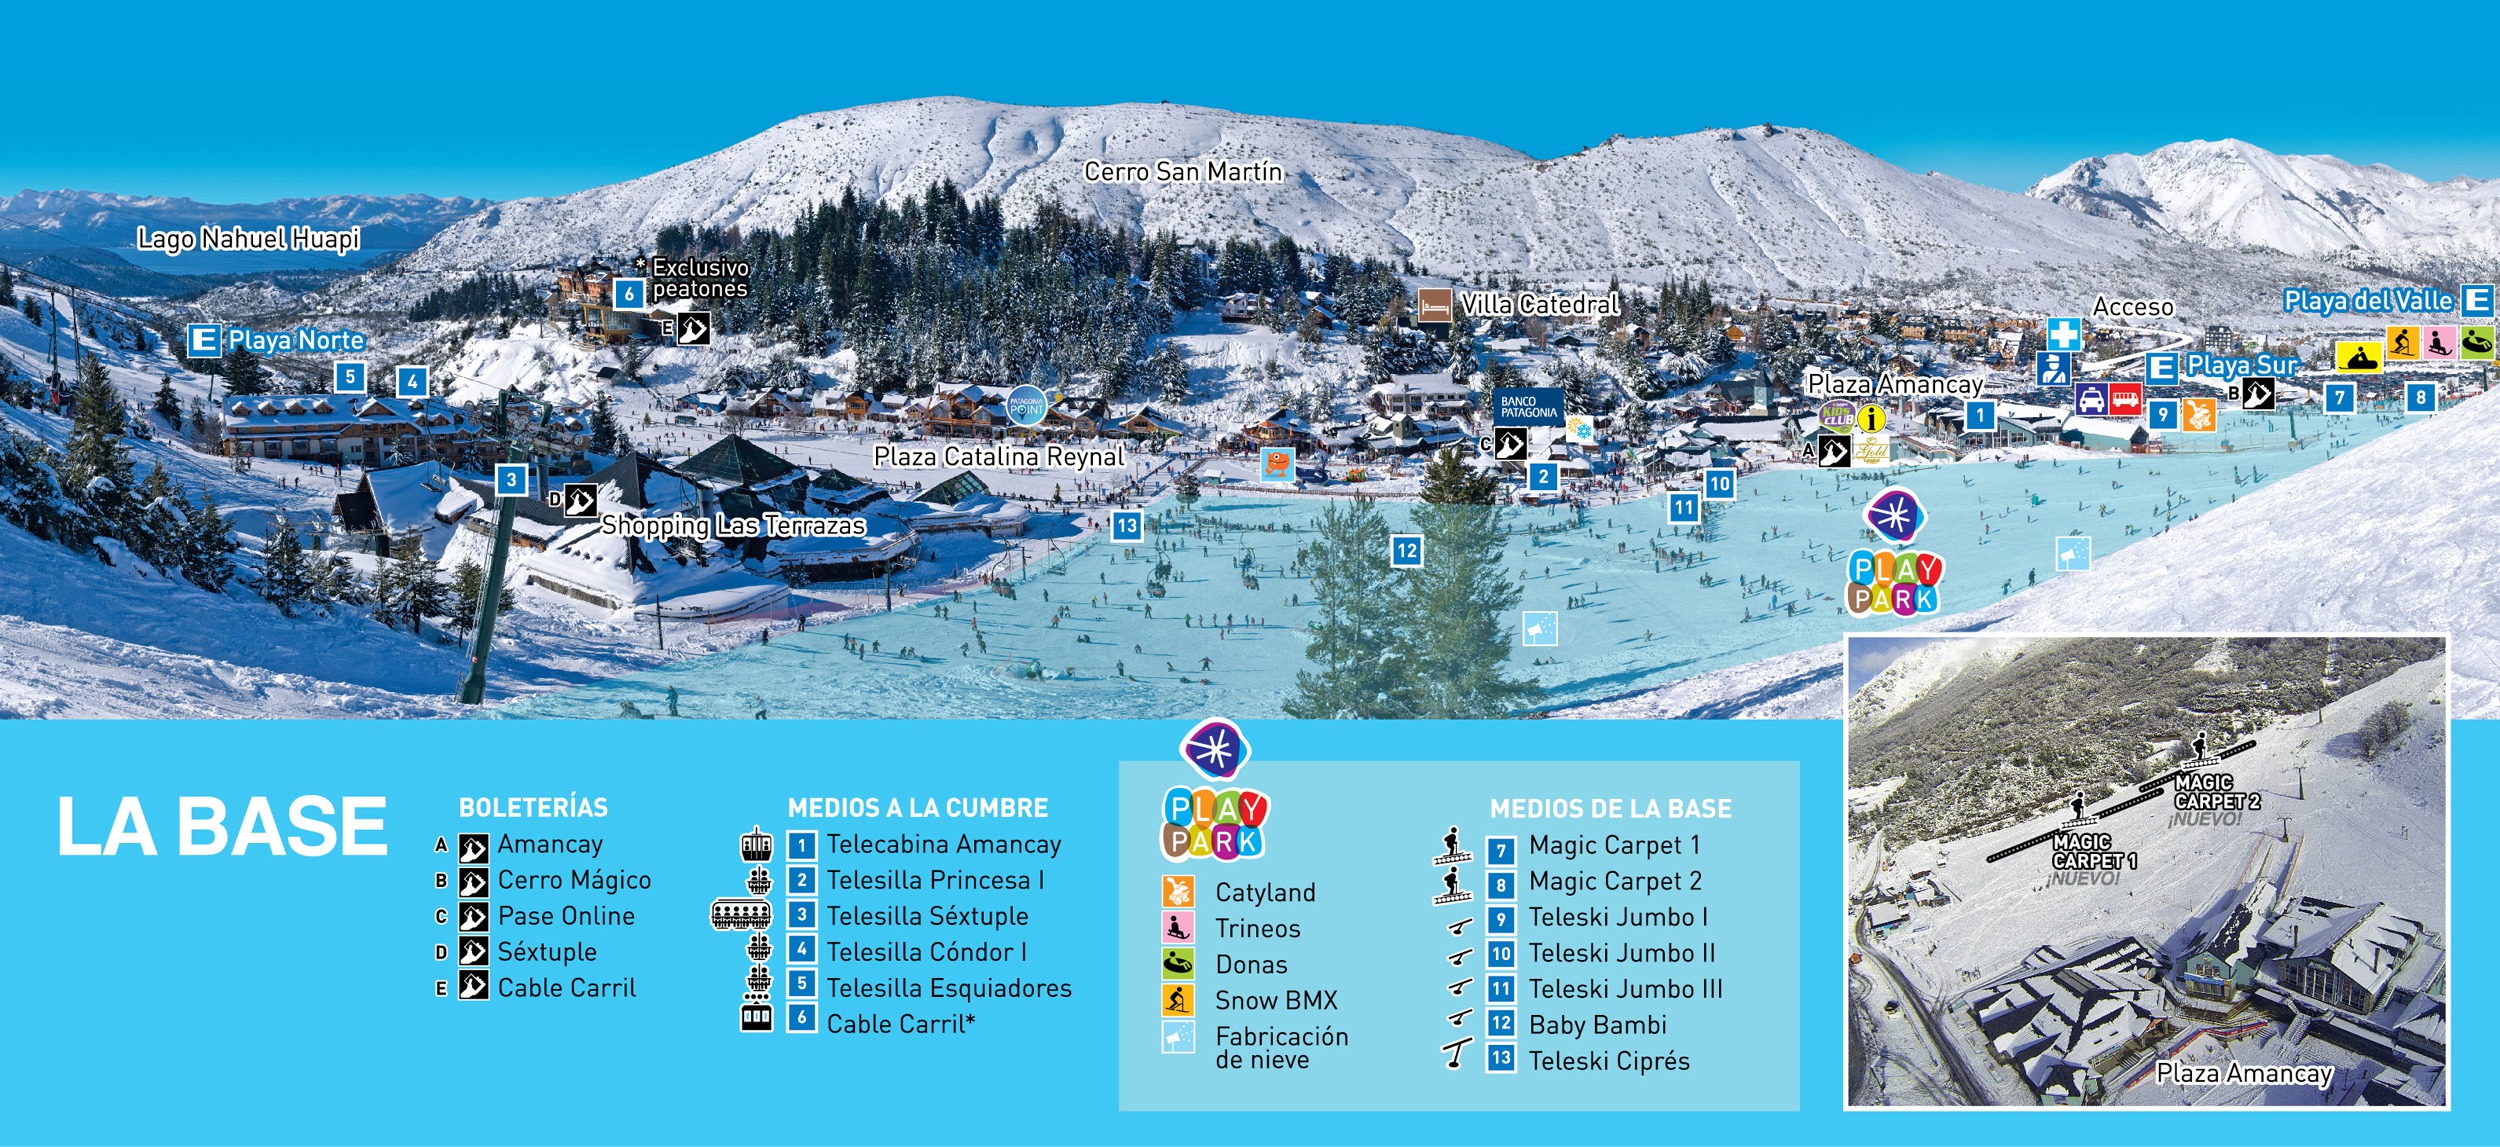 Esquiar-em Bariloche Mapa-da-Base-Cerro-Catedral